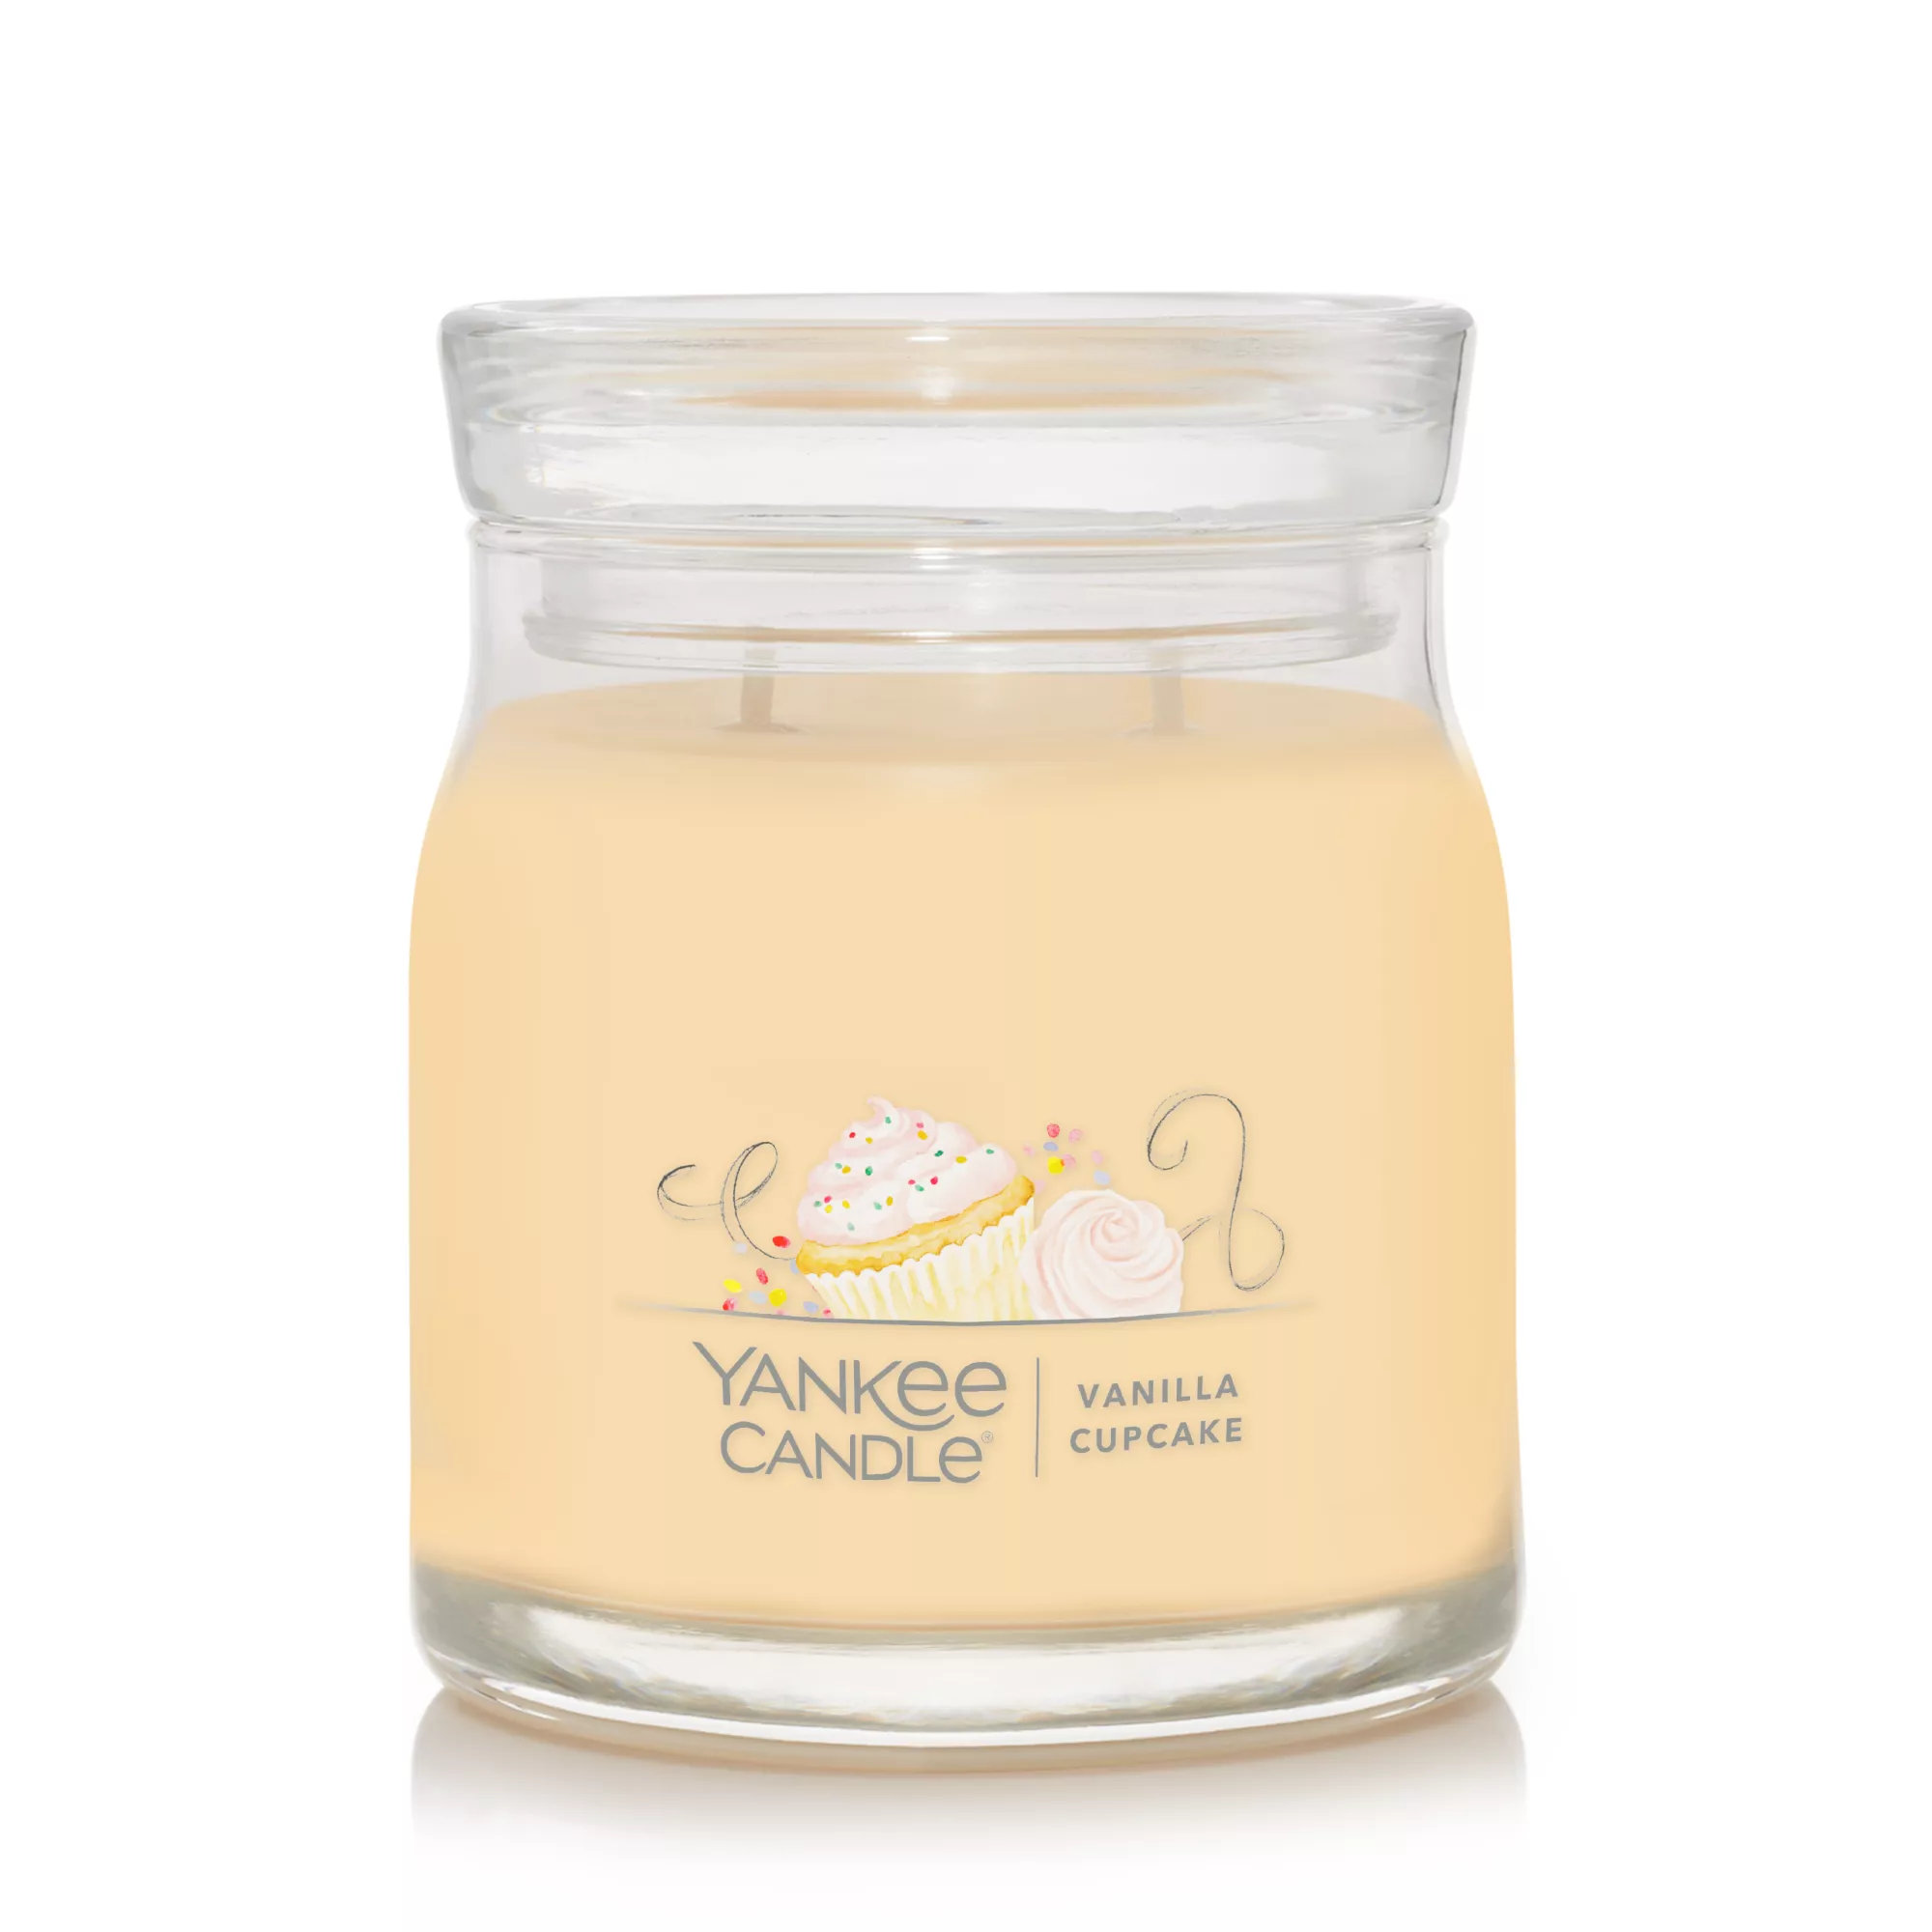 YANKEE CANDLE Signature Vanilla Cupcake Scented Jar Candle & Reviews